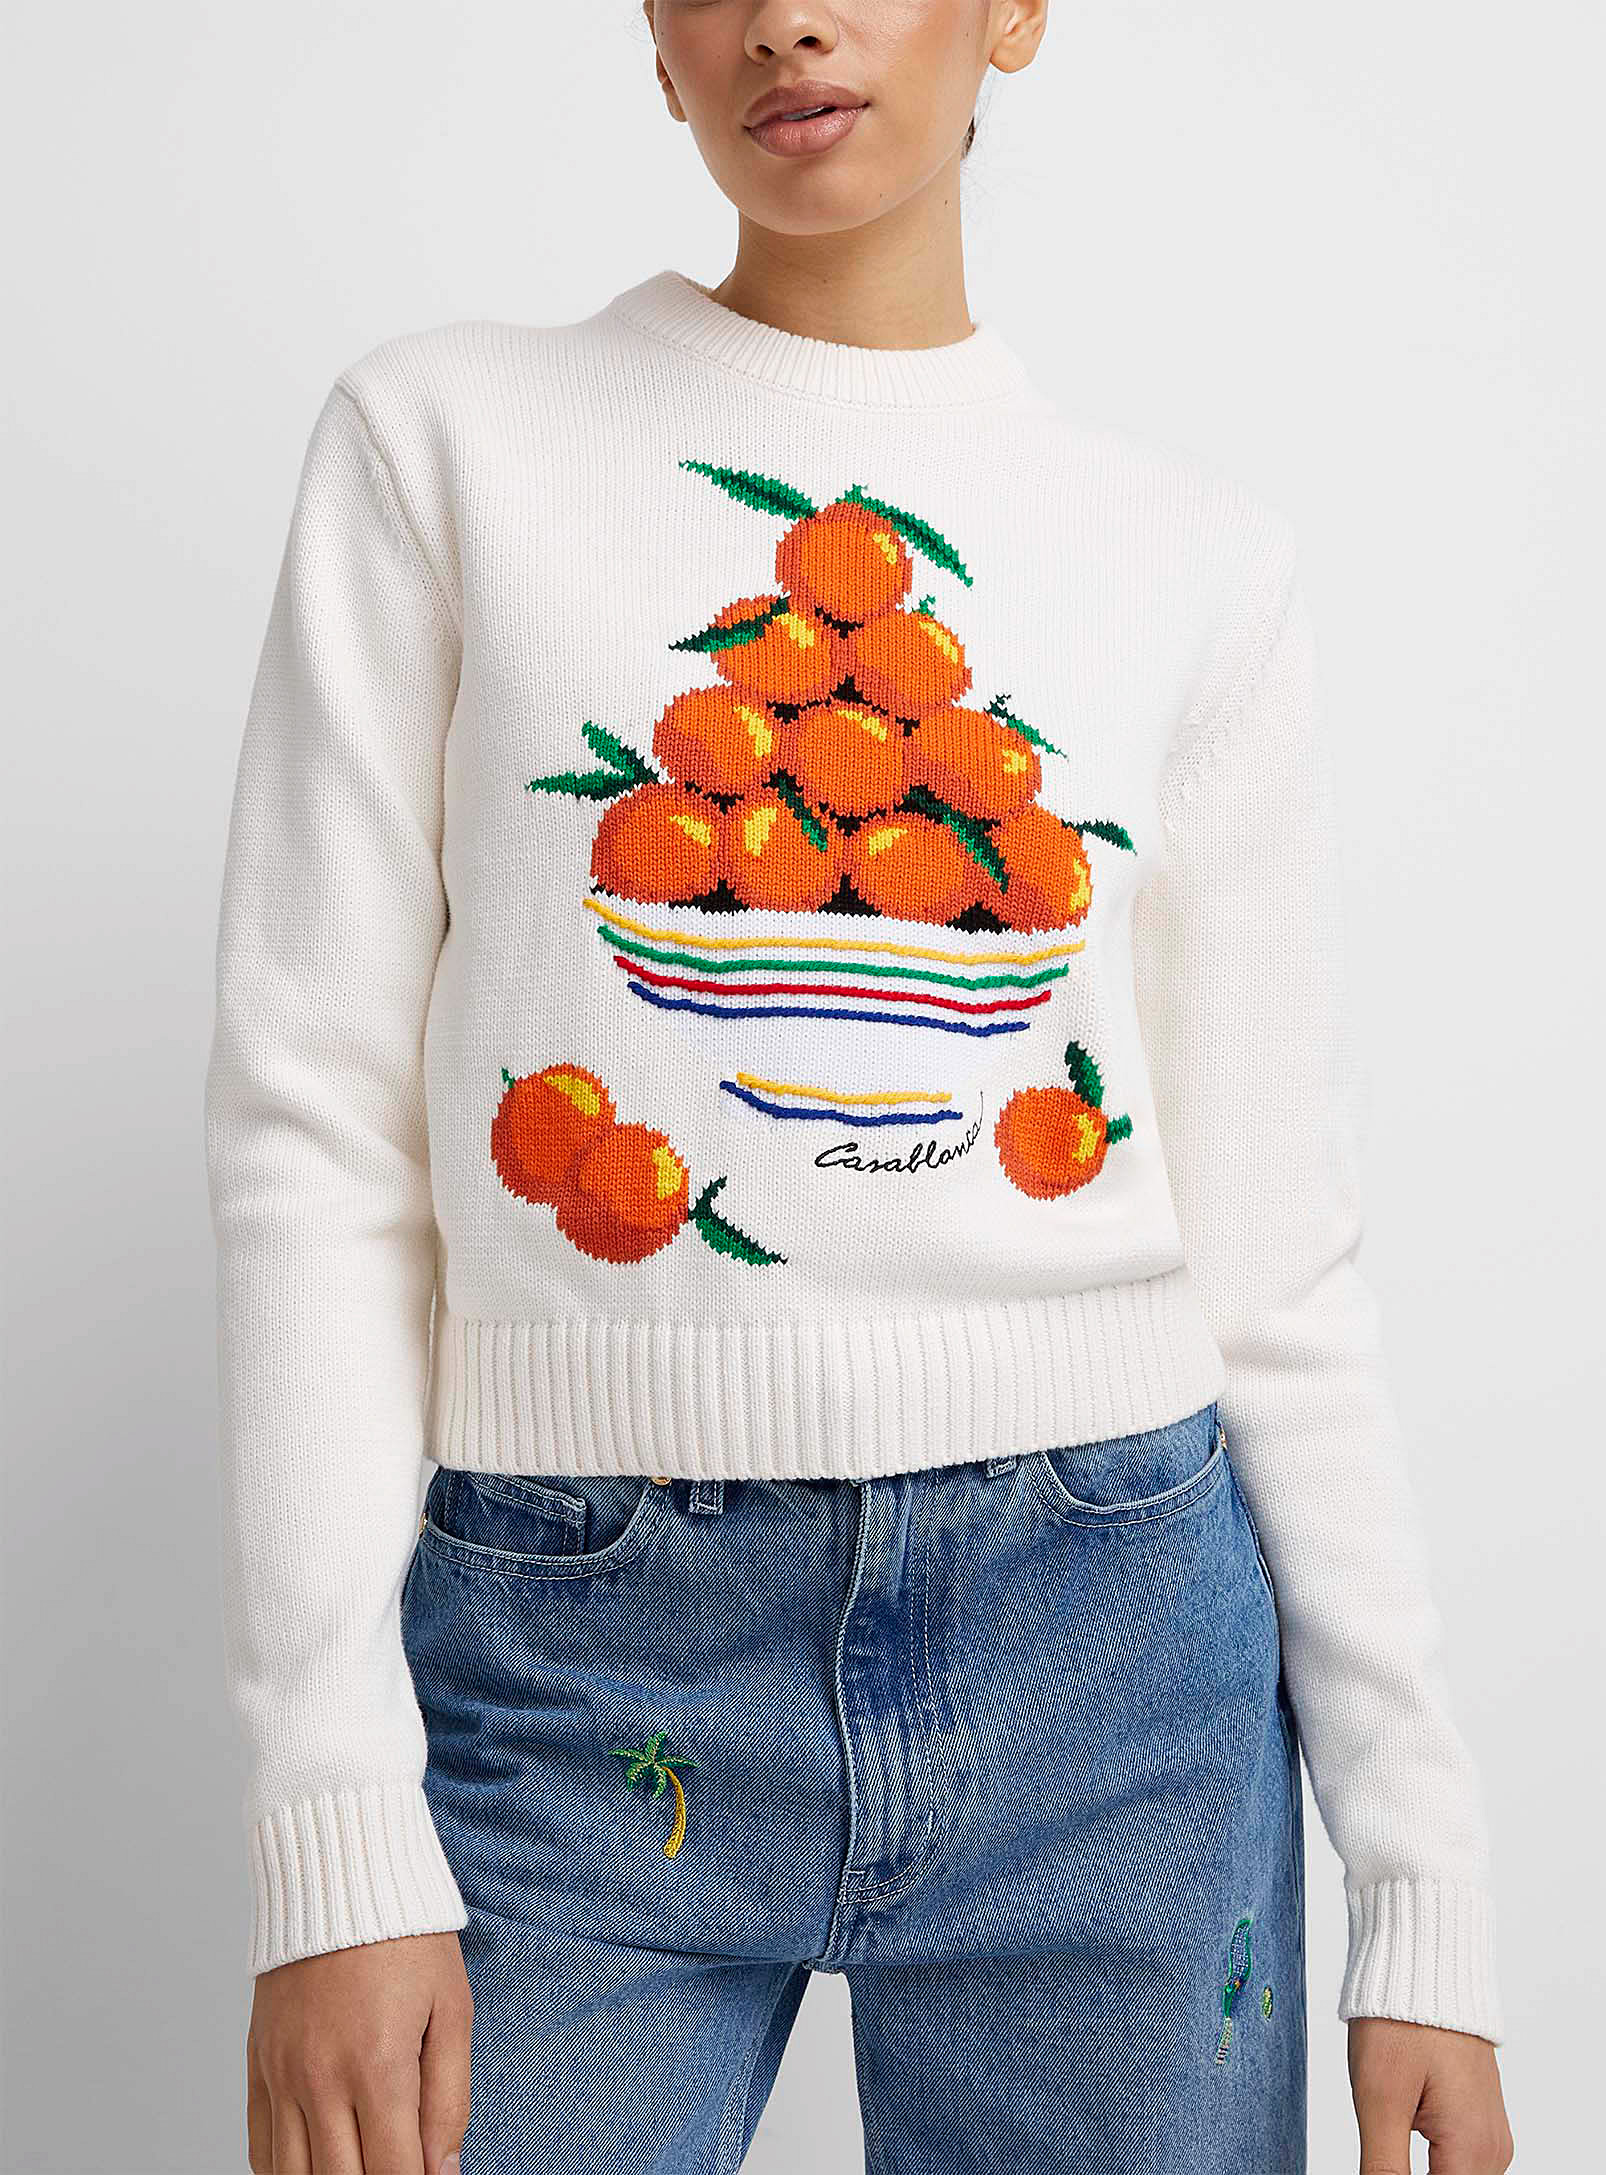 Casablanca - Women's Oranges intarsia knit sweater